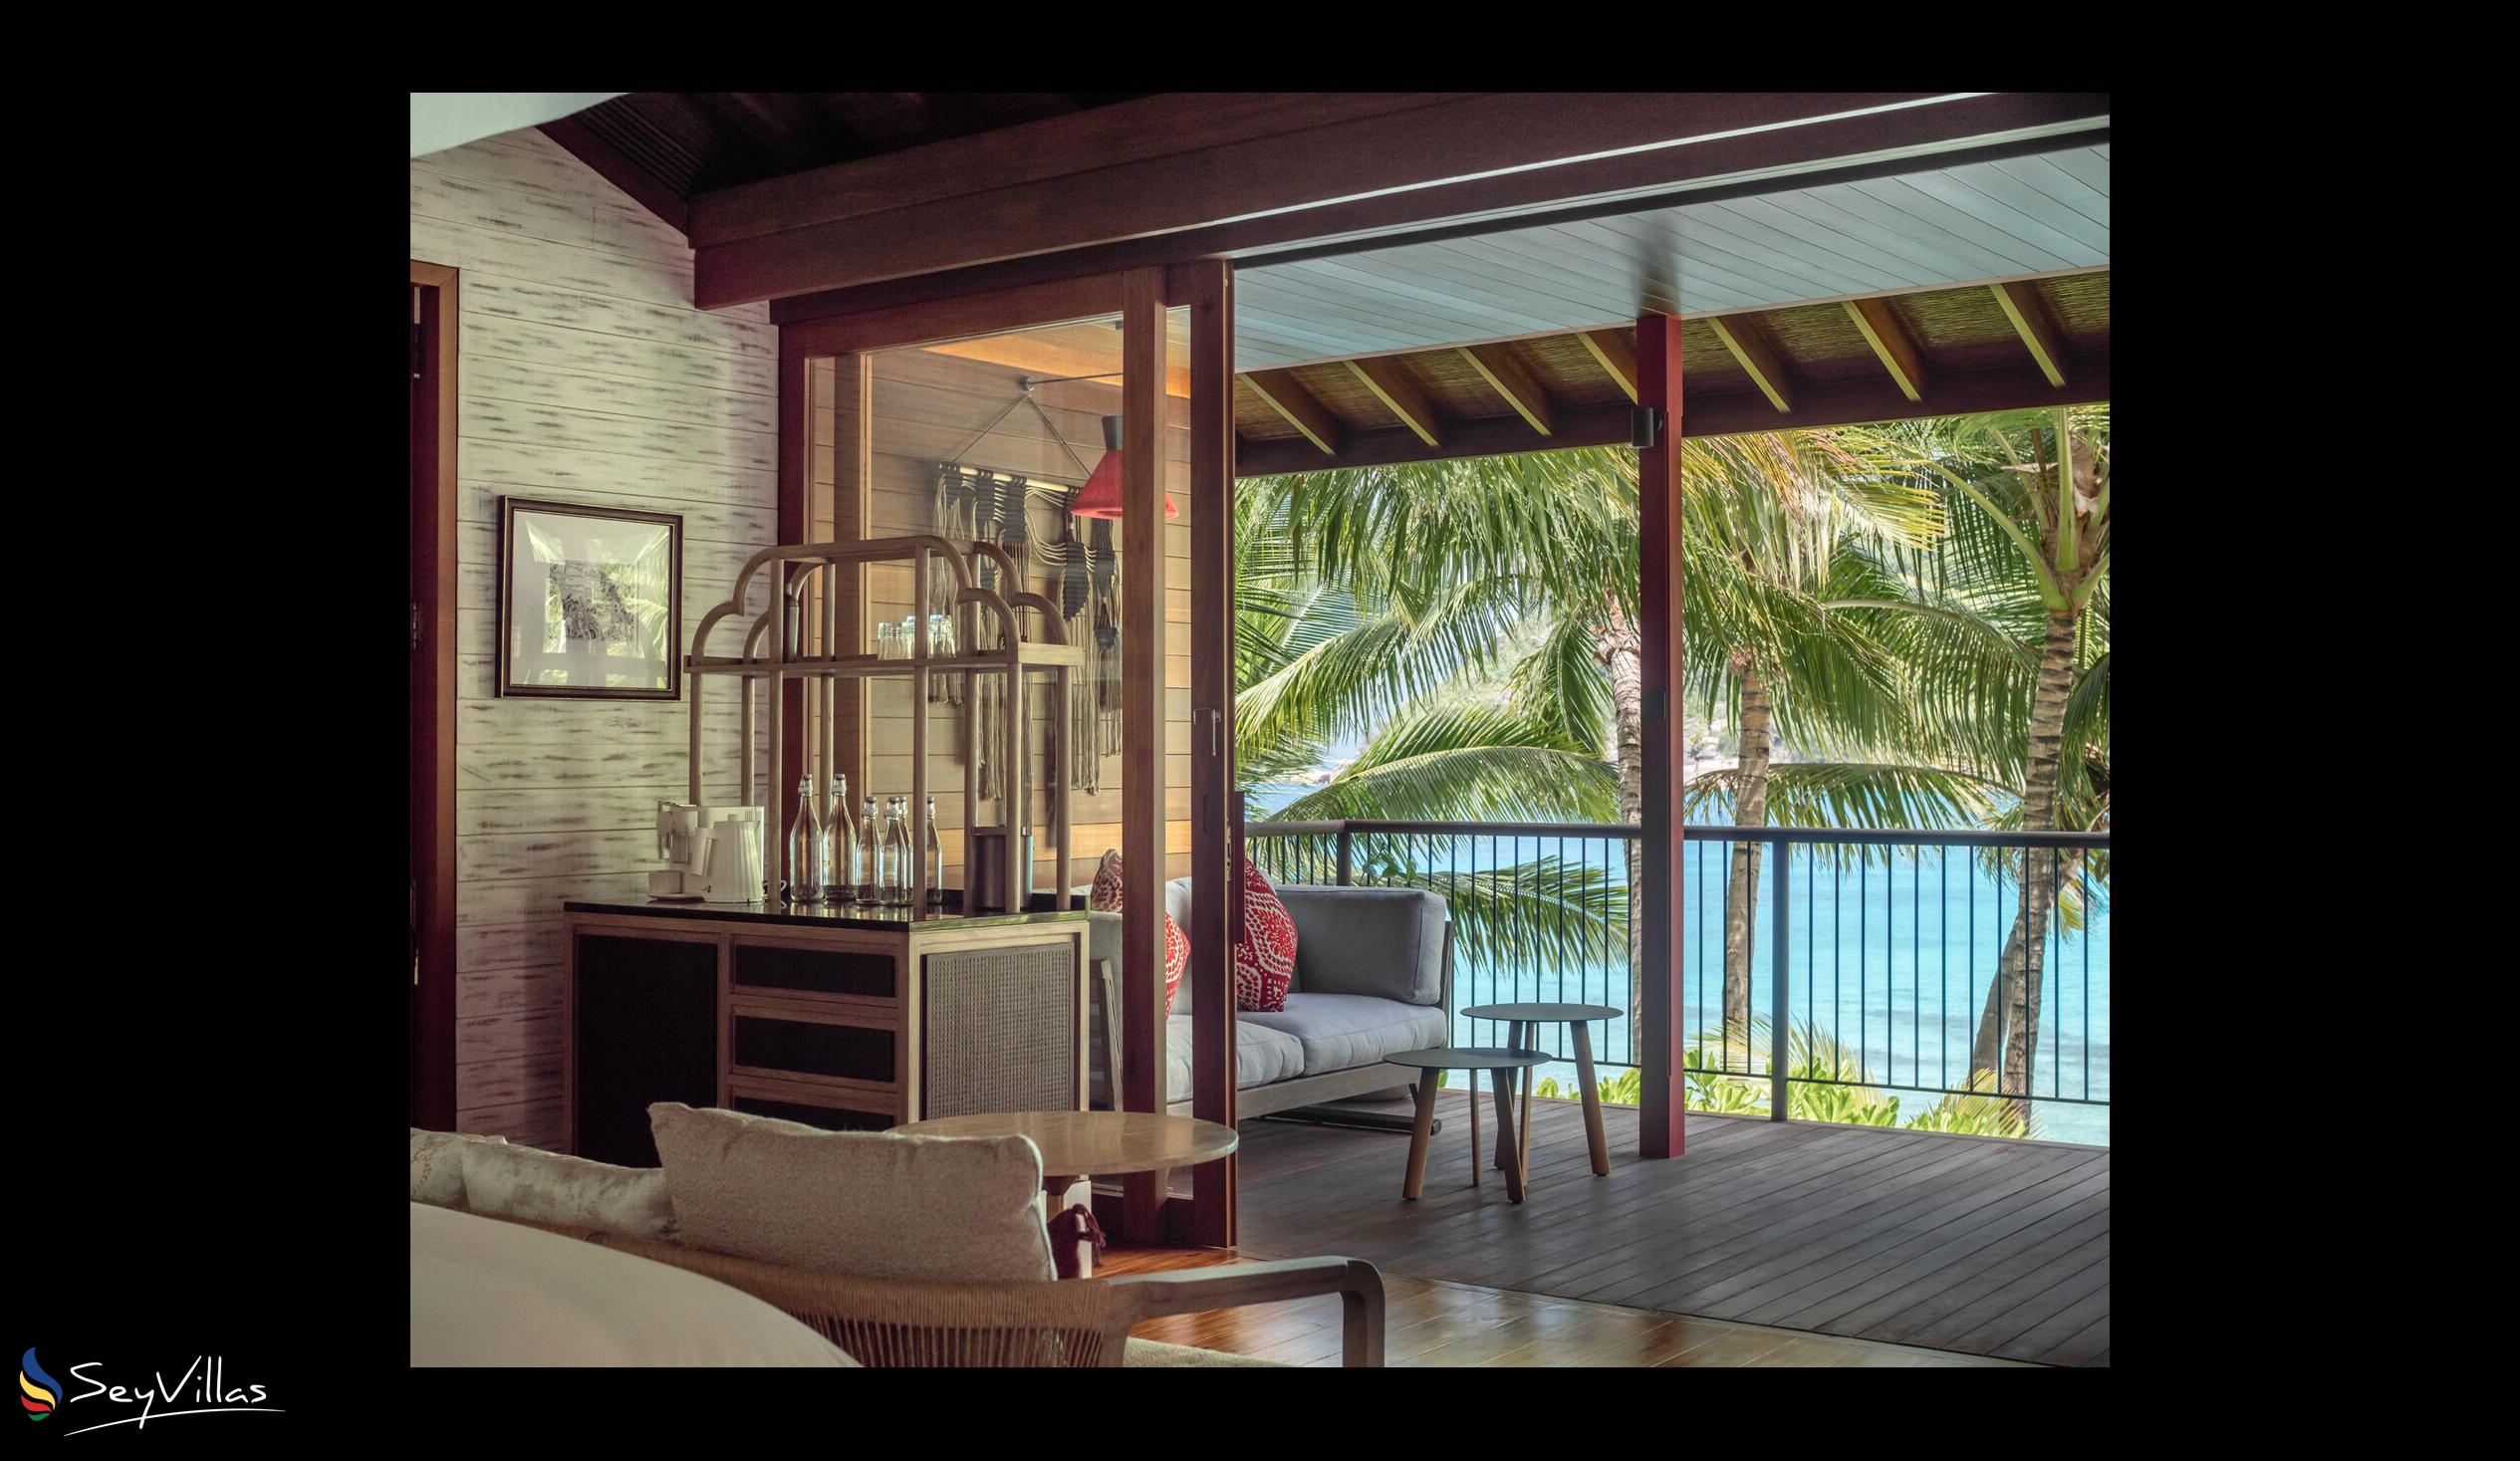 Photo 141: Four Seasons Resort - 3-Bedroom Royal Suite - Mahé (Seychelles)